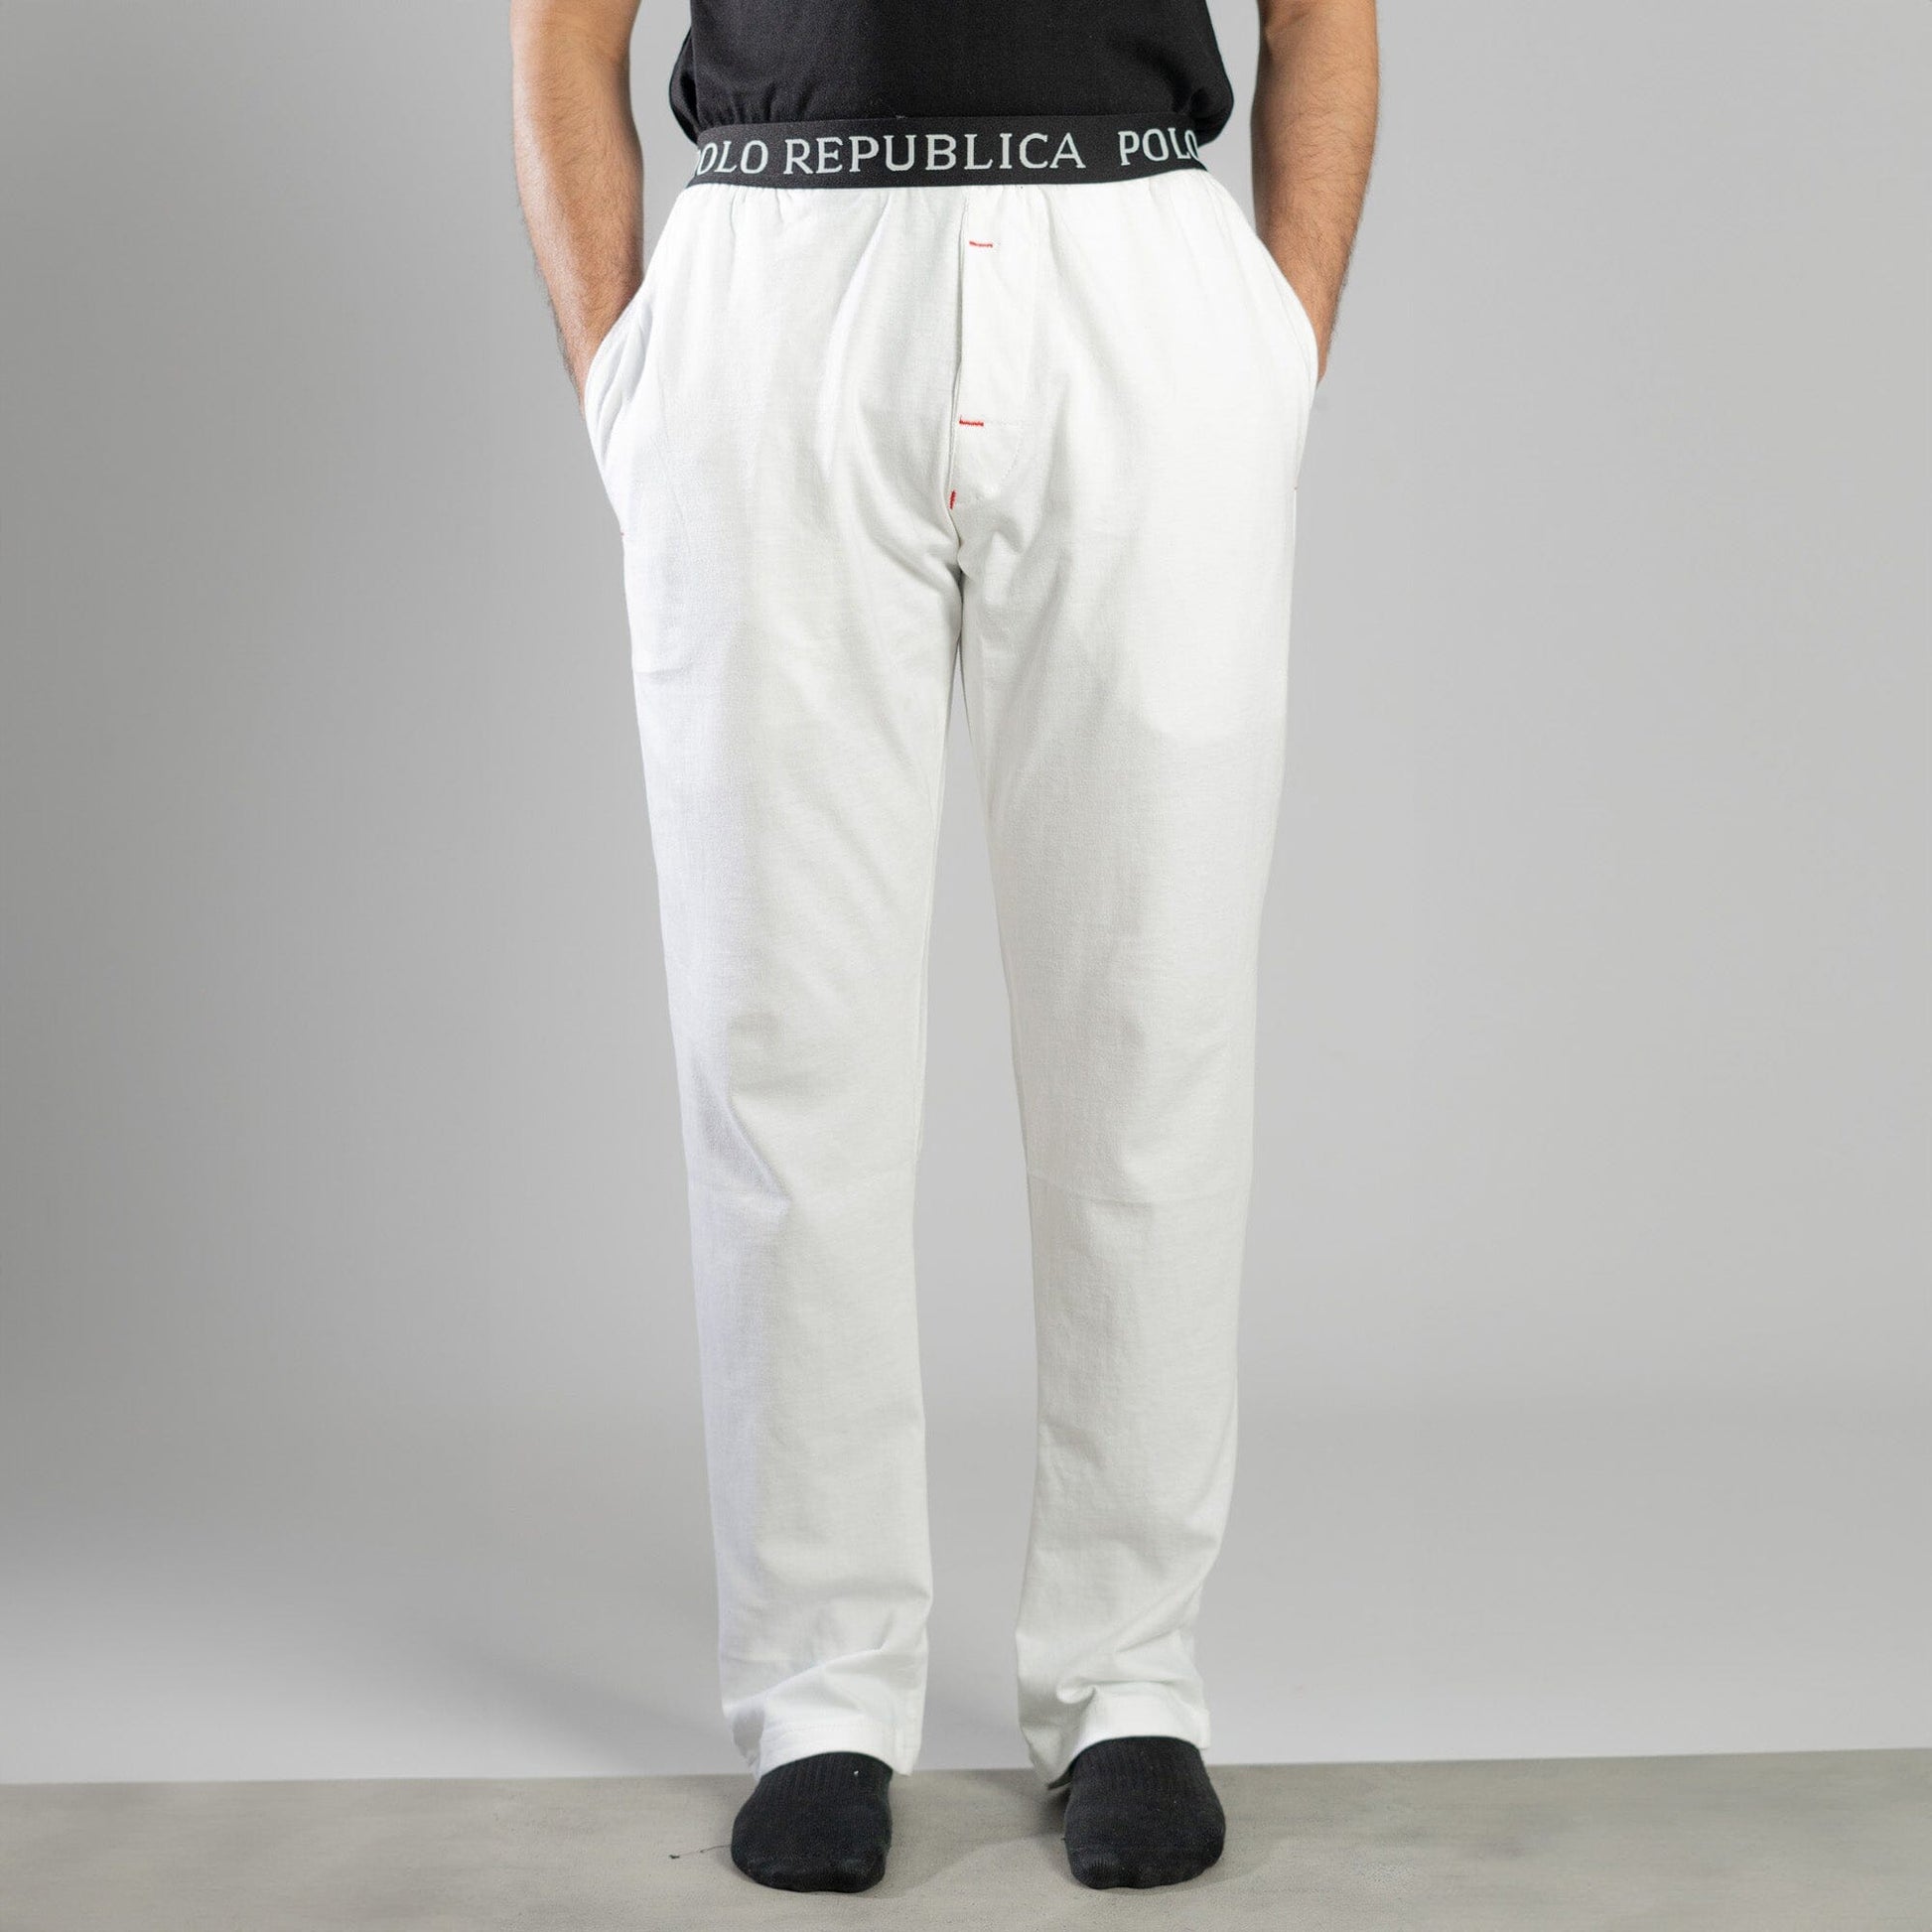 Polo Republica Men's Essentials Jersey Lounge Pants Men's Trousers Polo Republica White S 